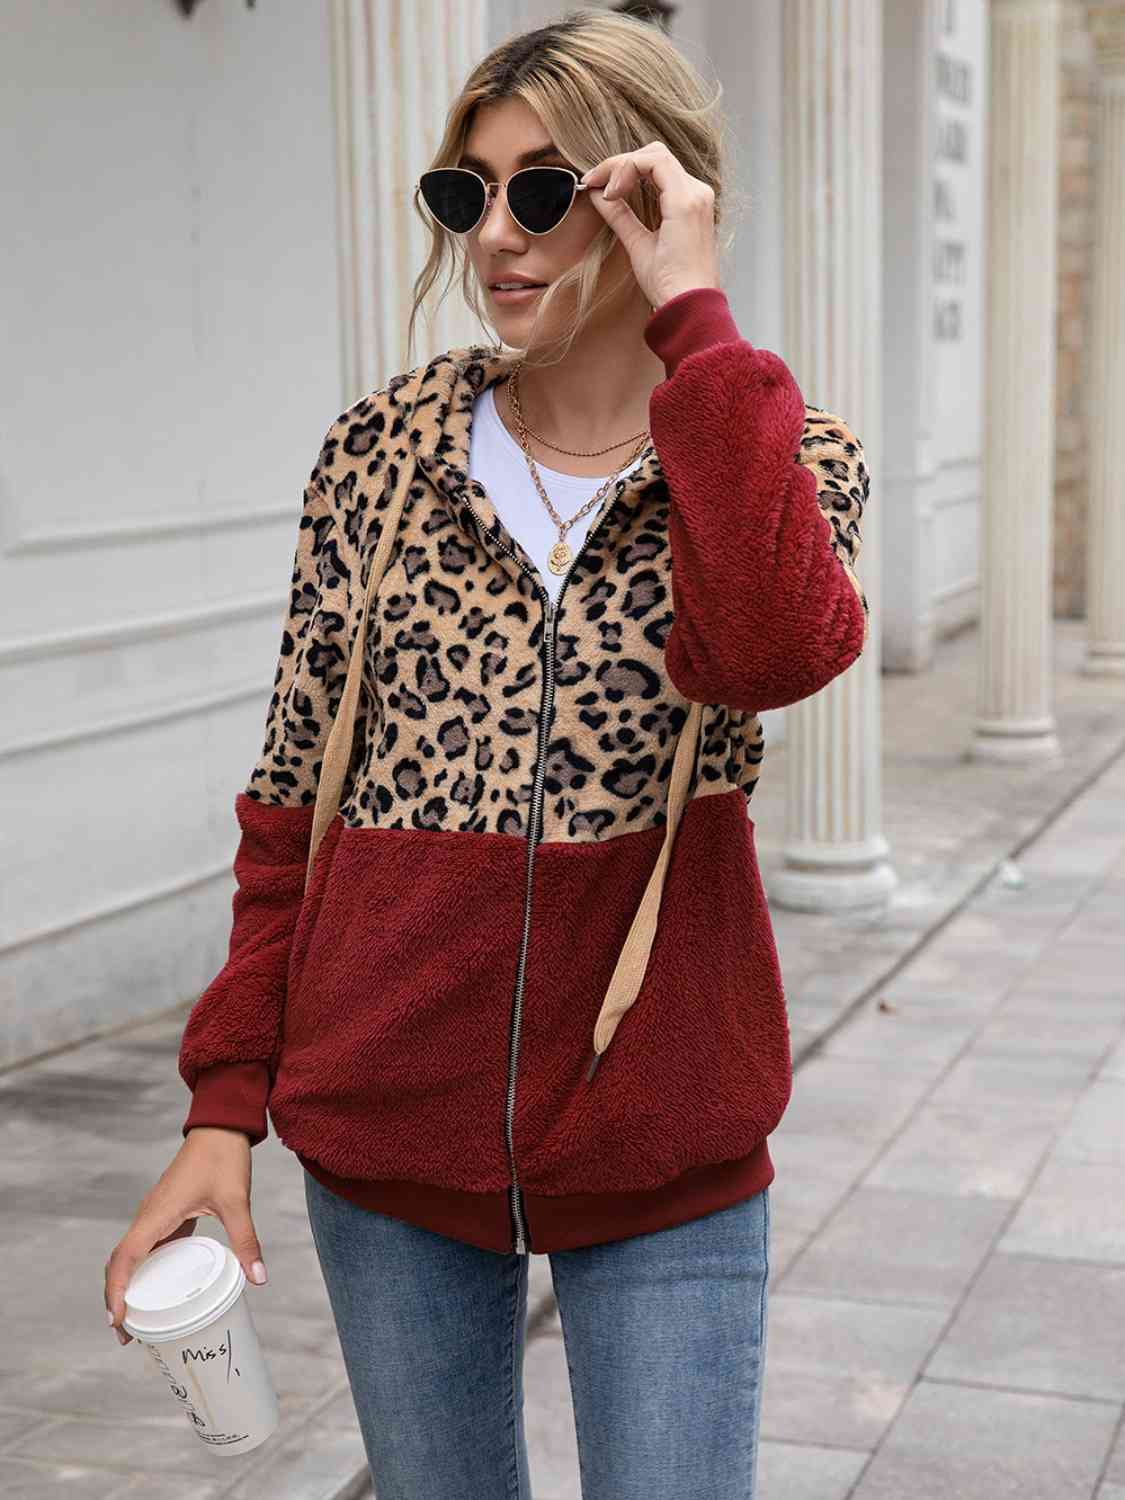 Leopard Drawstring Hooded Long Sleeve Outerwear